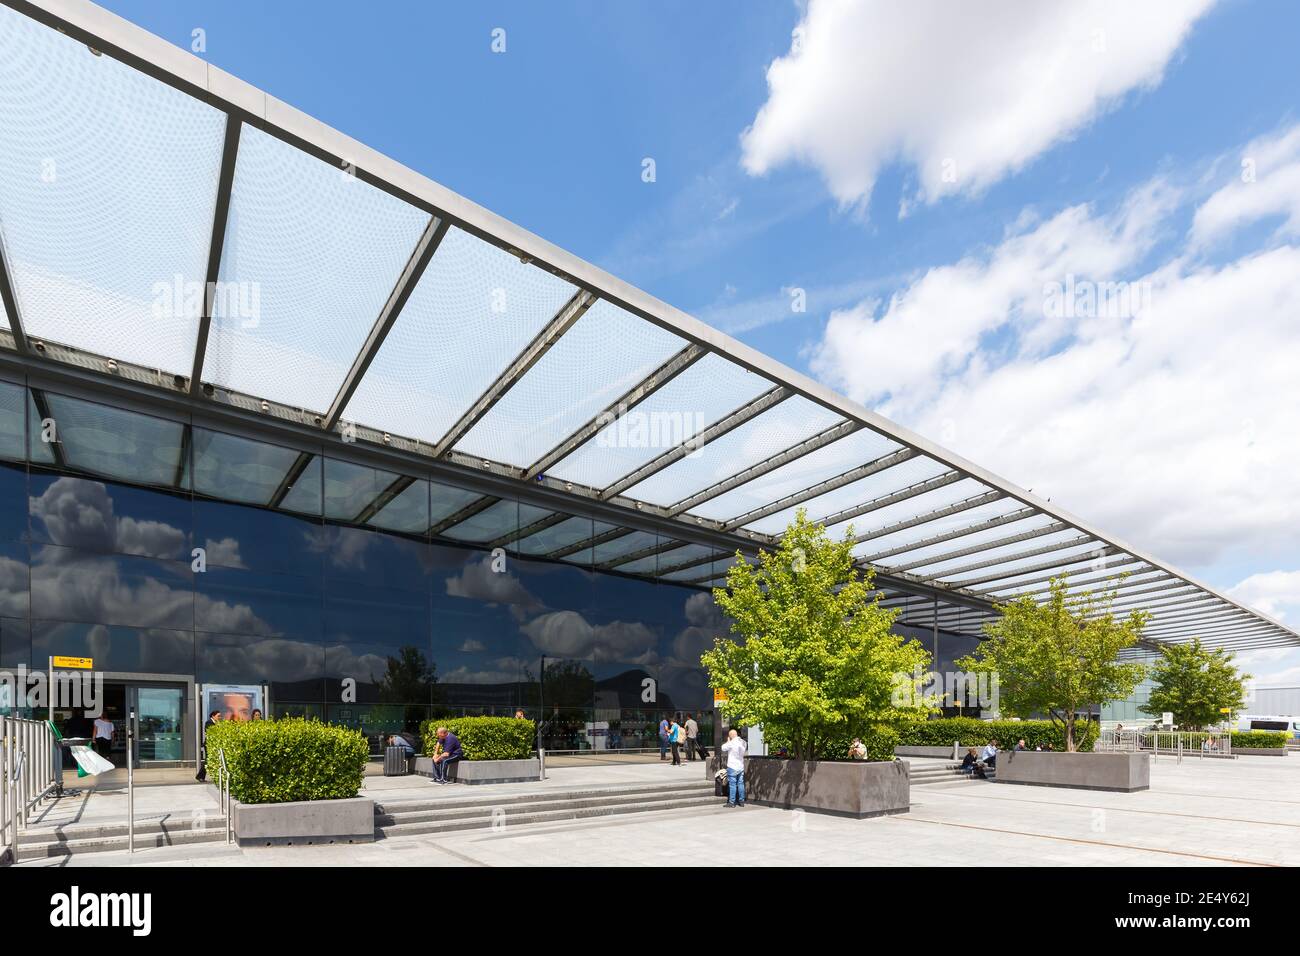 London, United Kingdom - July 31, 2018: Terminal 4 of London Heathrow airport (LHR) in the United Kingdom. Stock Photo